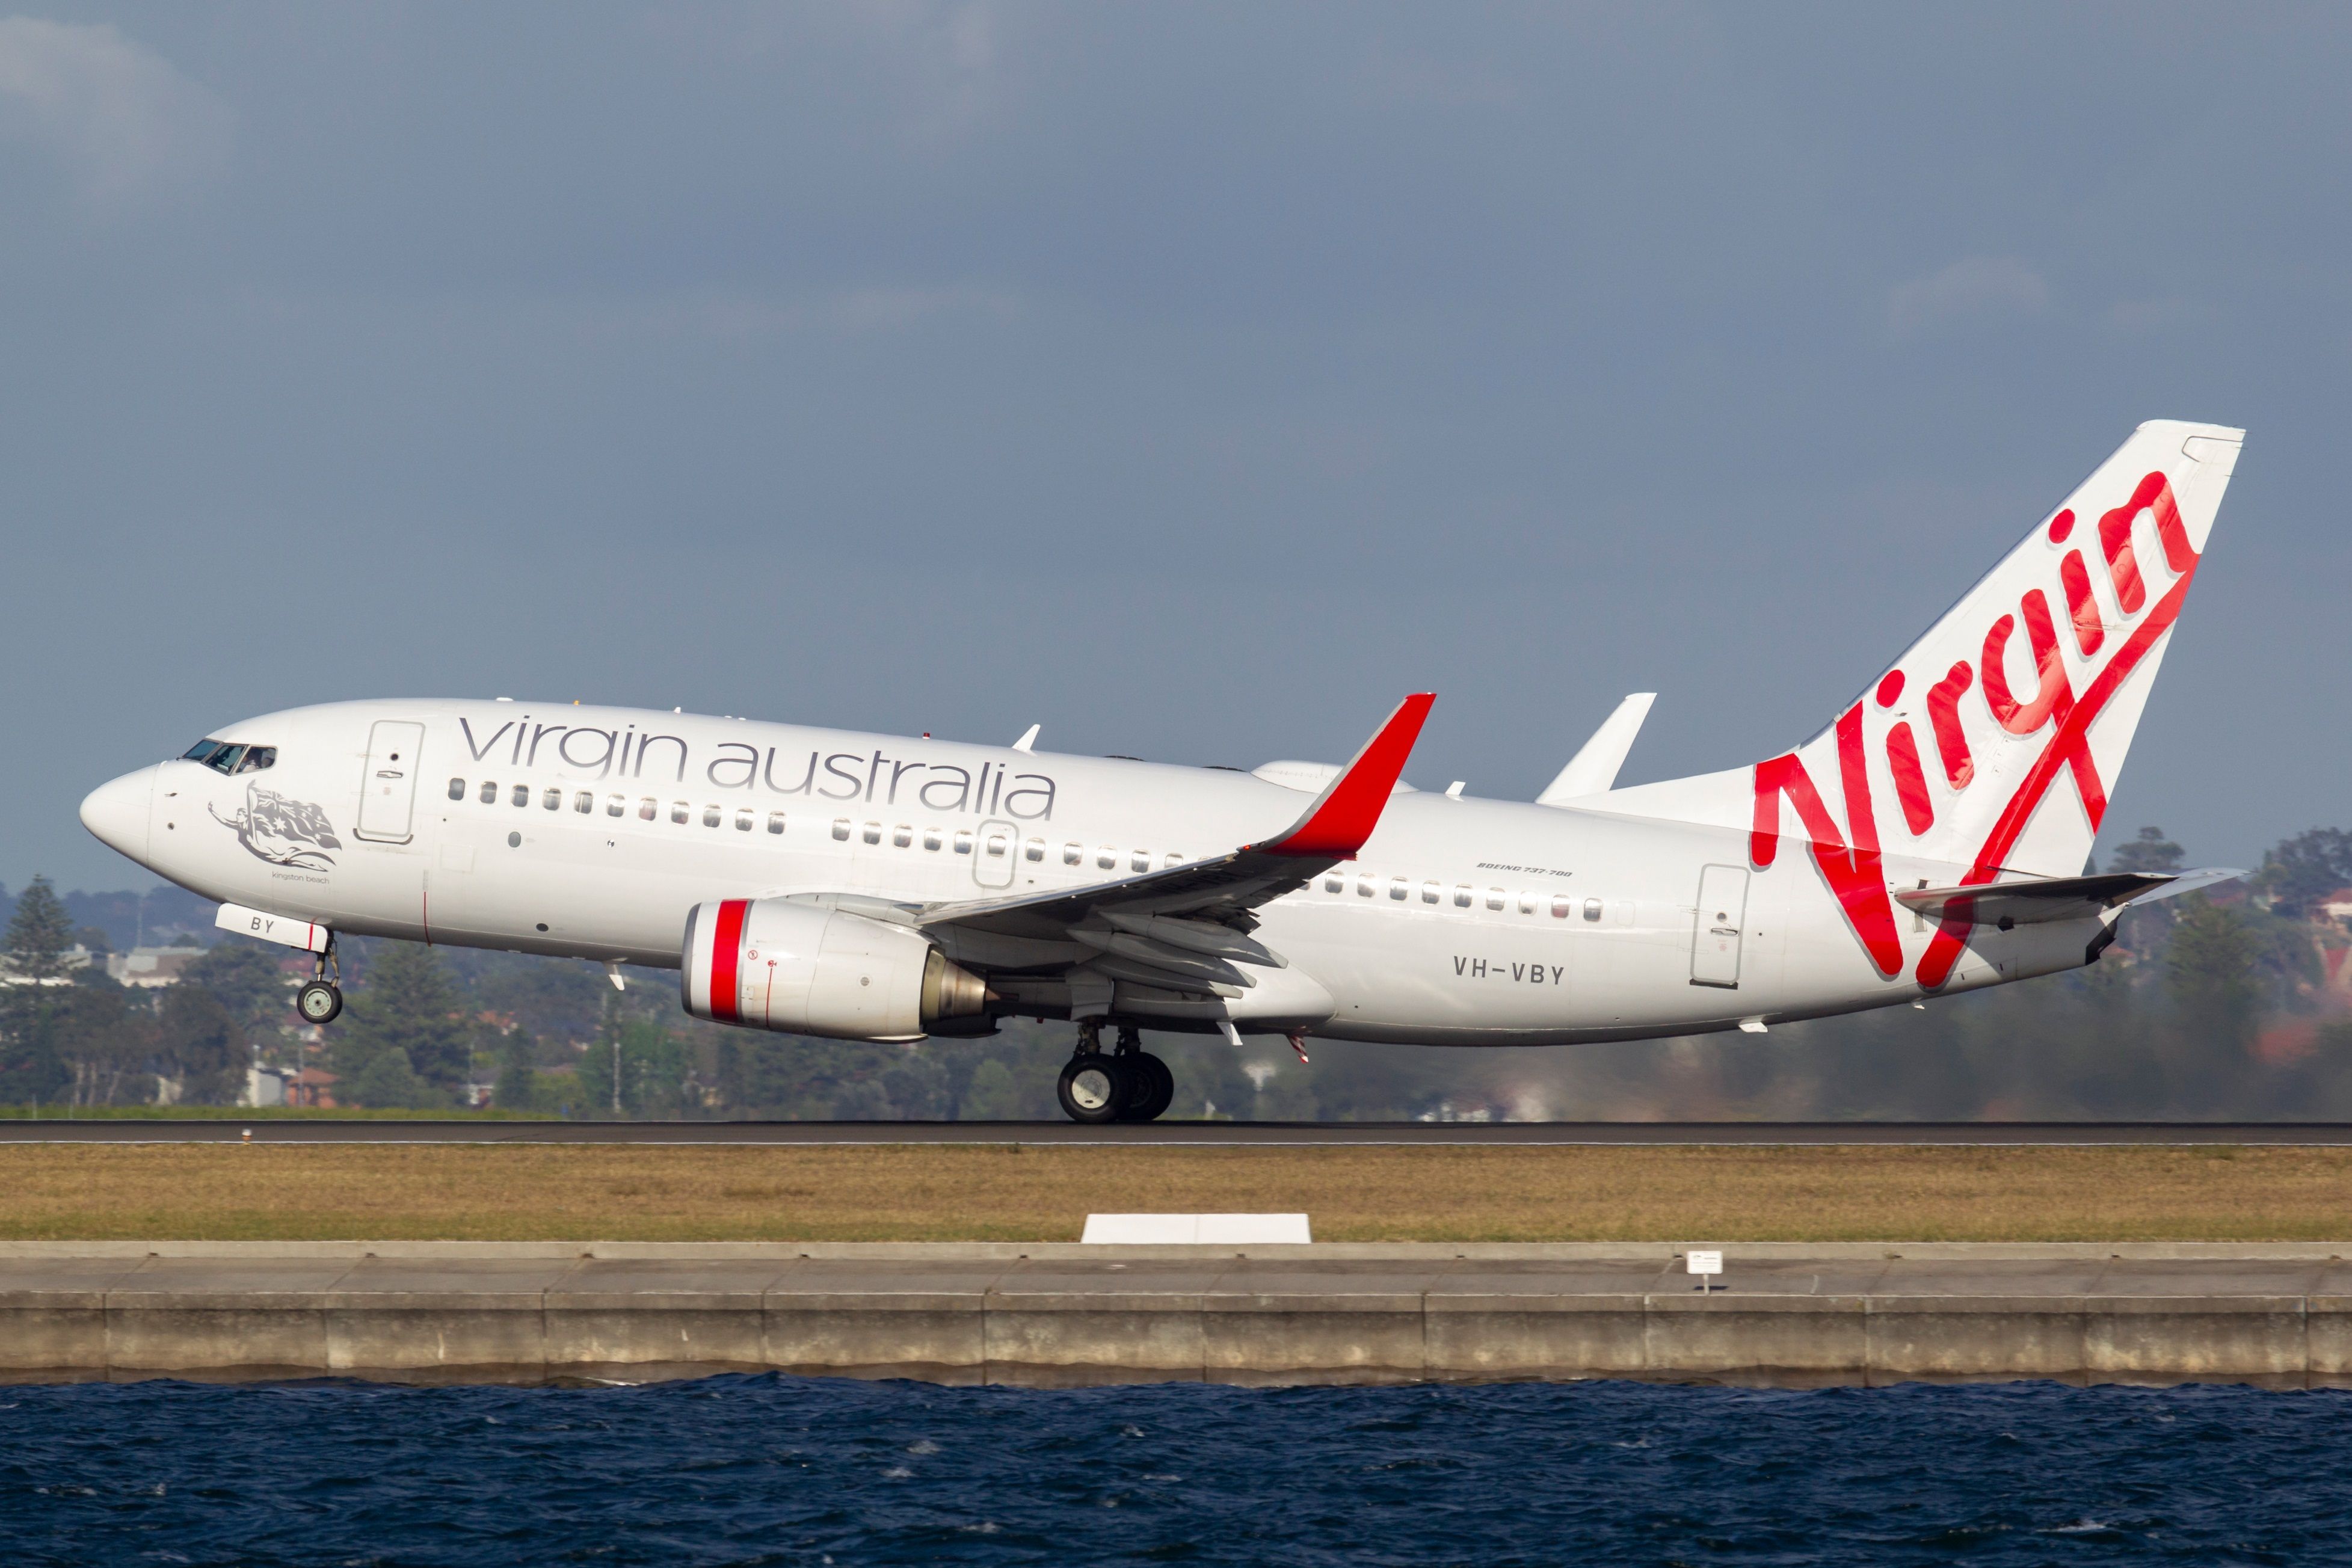 Virgin Australia 737-700 take off